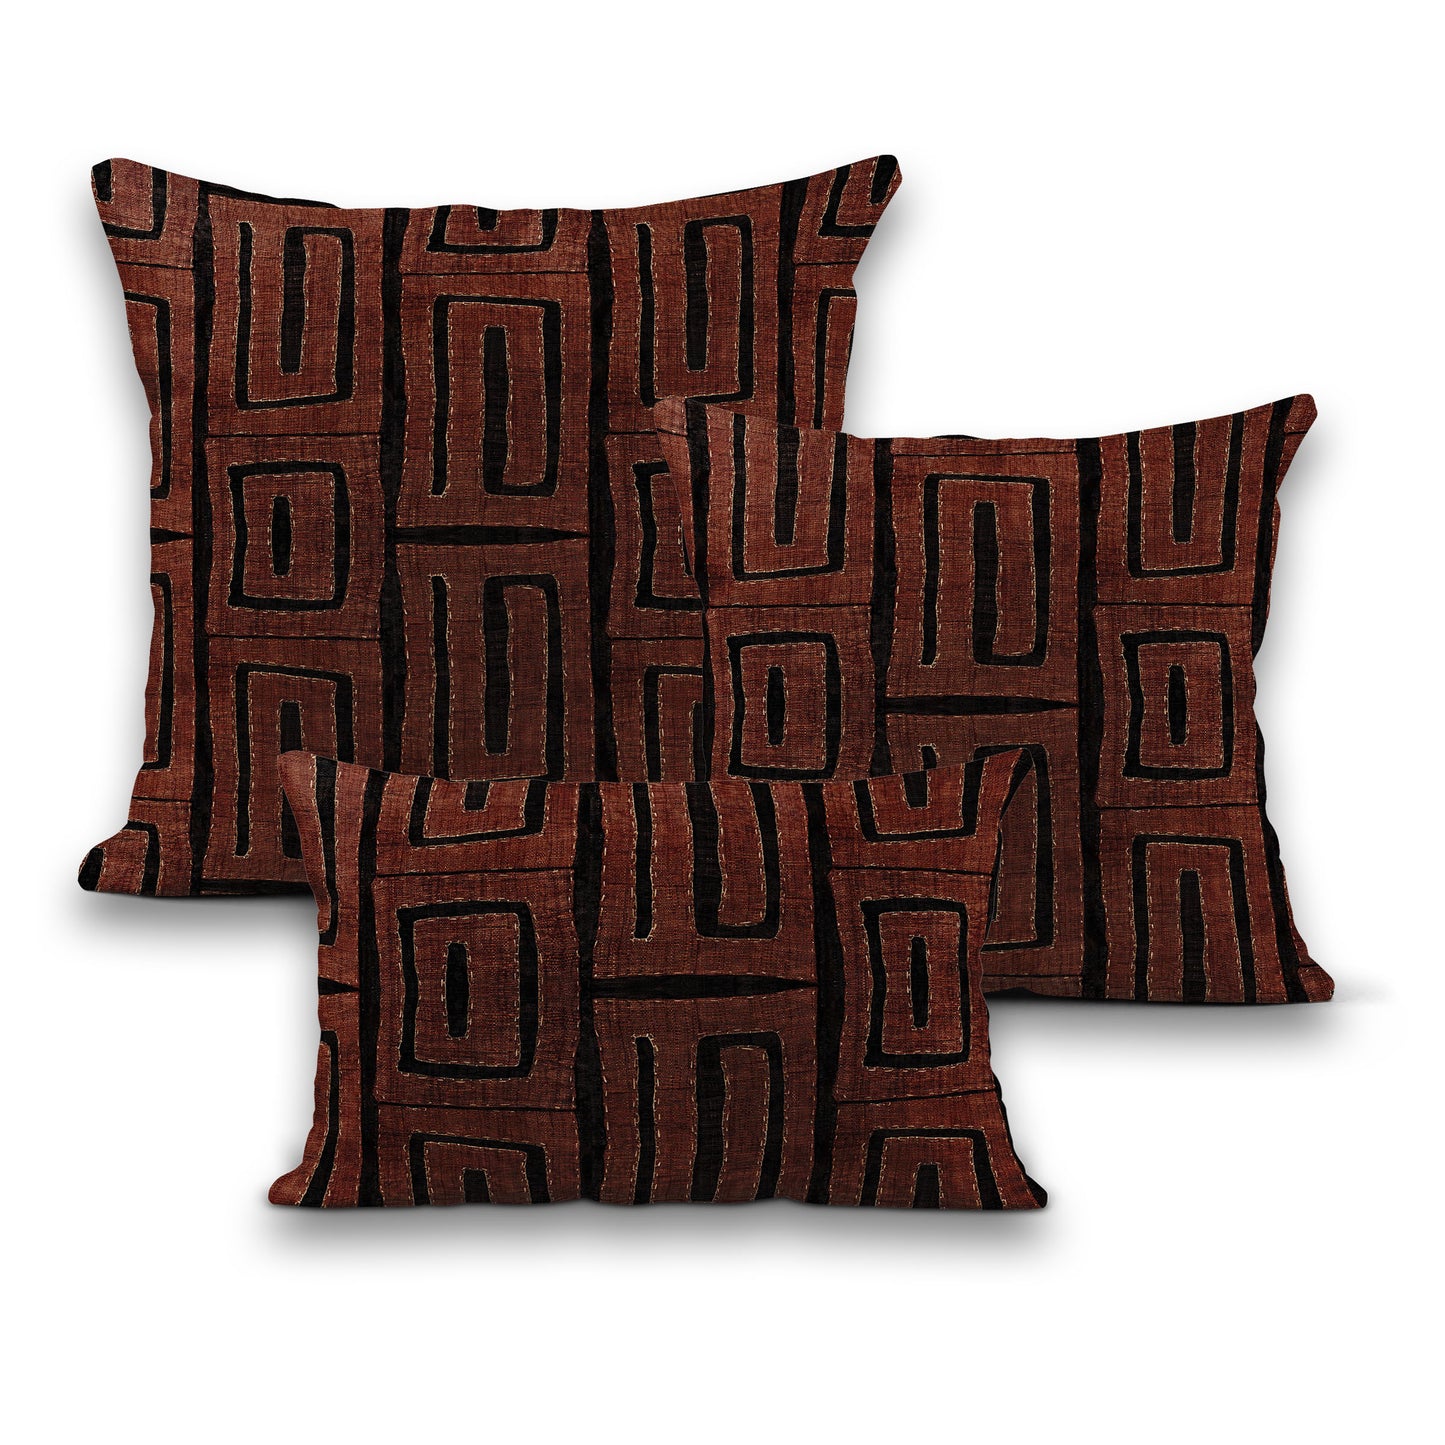 AnitaveeTextile Kuba Cloth Pillows Print in Brown and Black - 3 Sizes